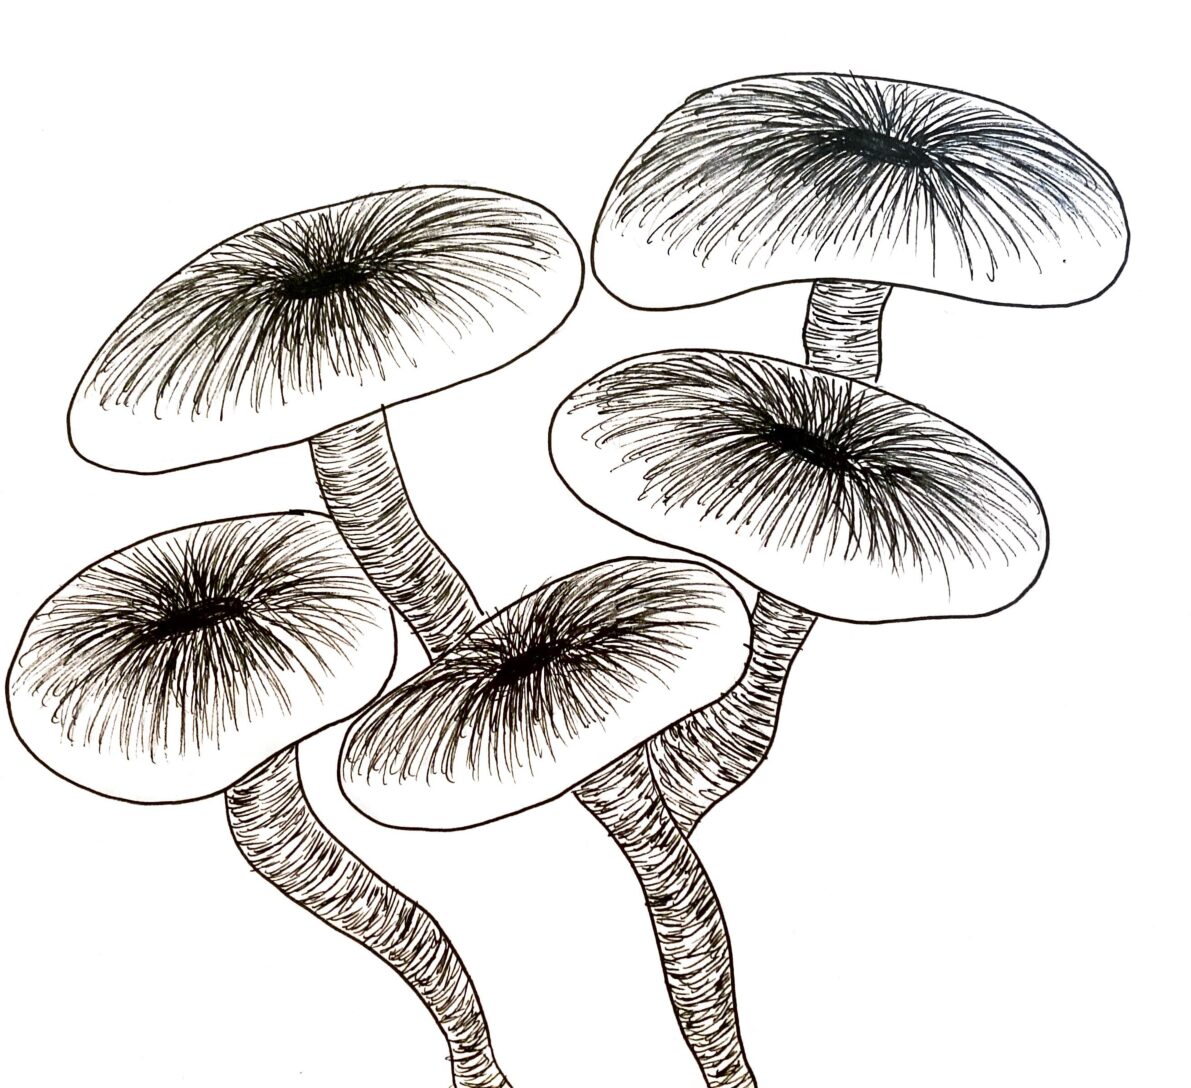 Hospitality to mushrooms: Boones local fungi seller